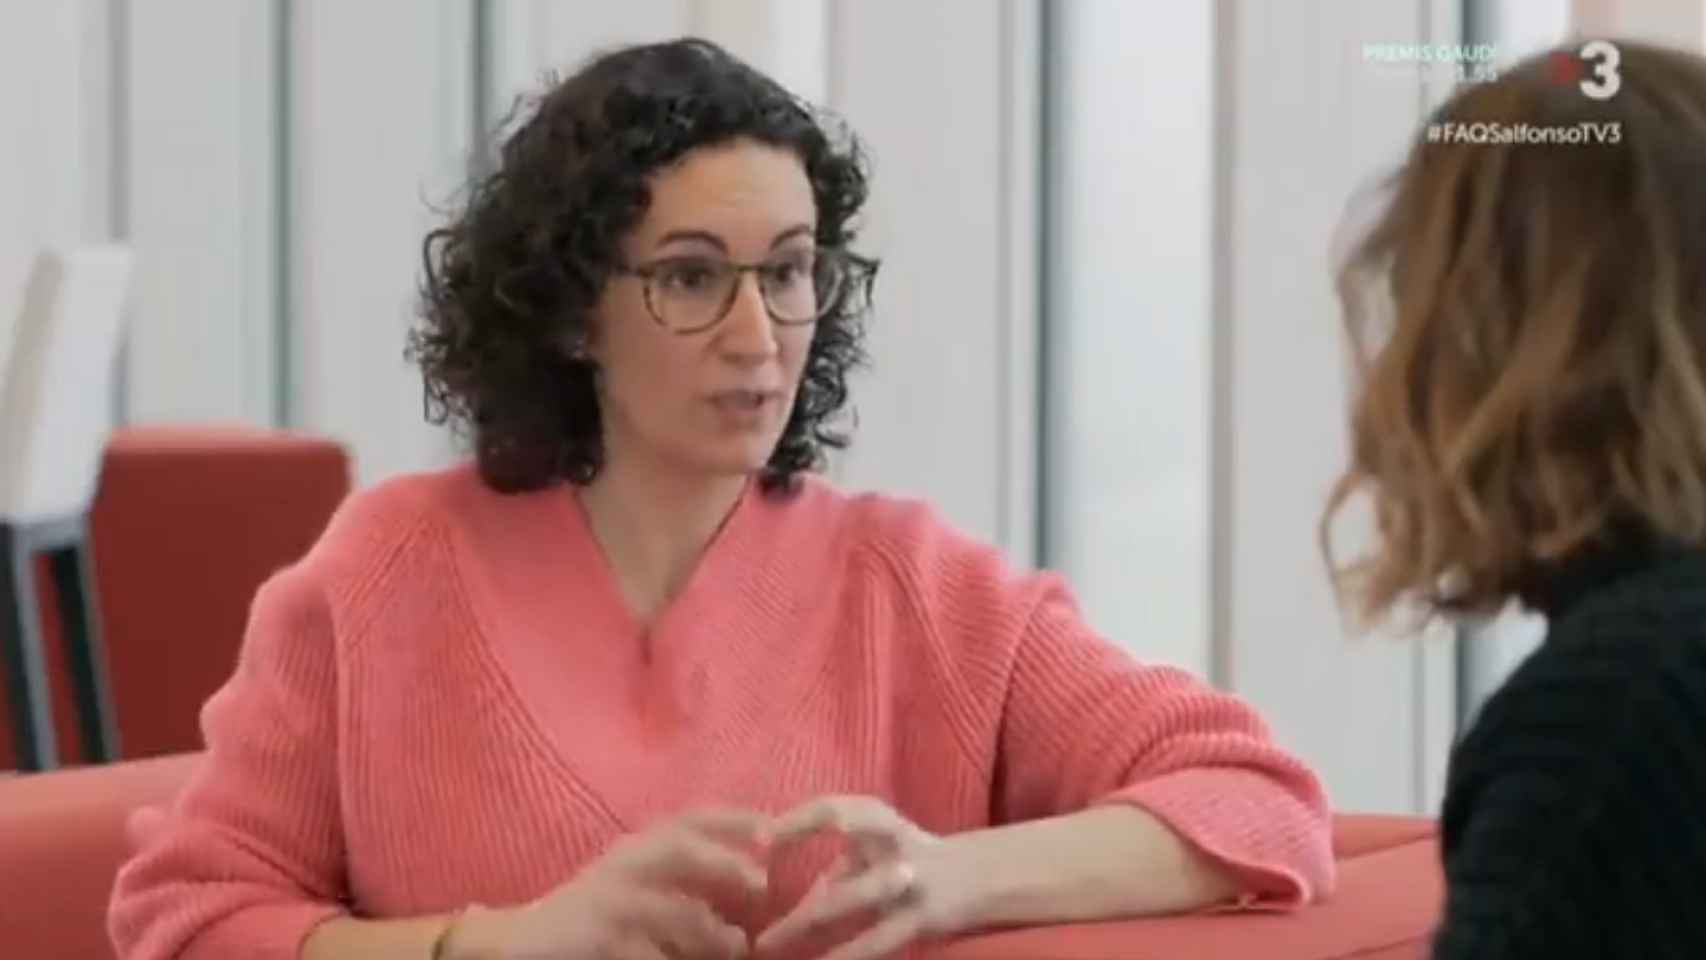 Marta Rovira, durante la entrevista en 'FAQs' de TV3